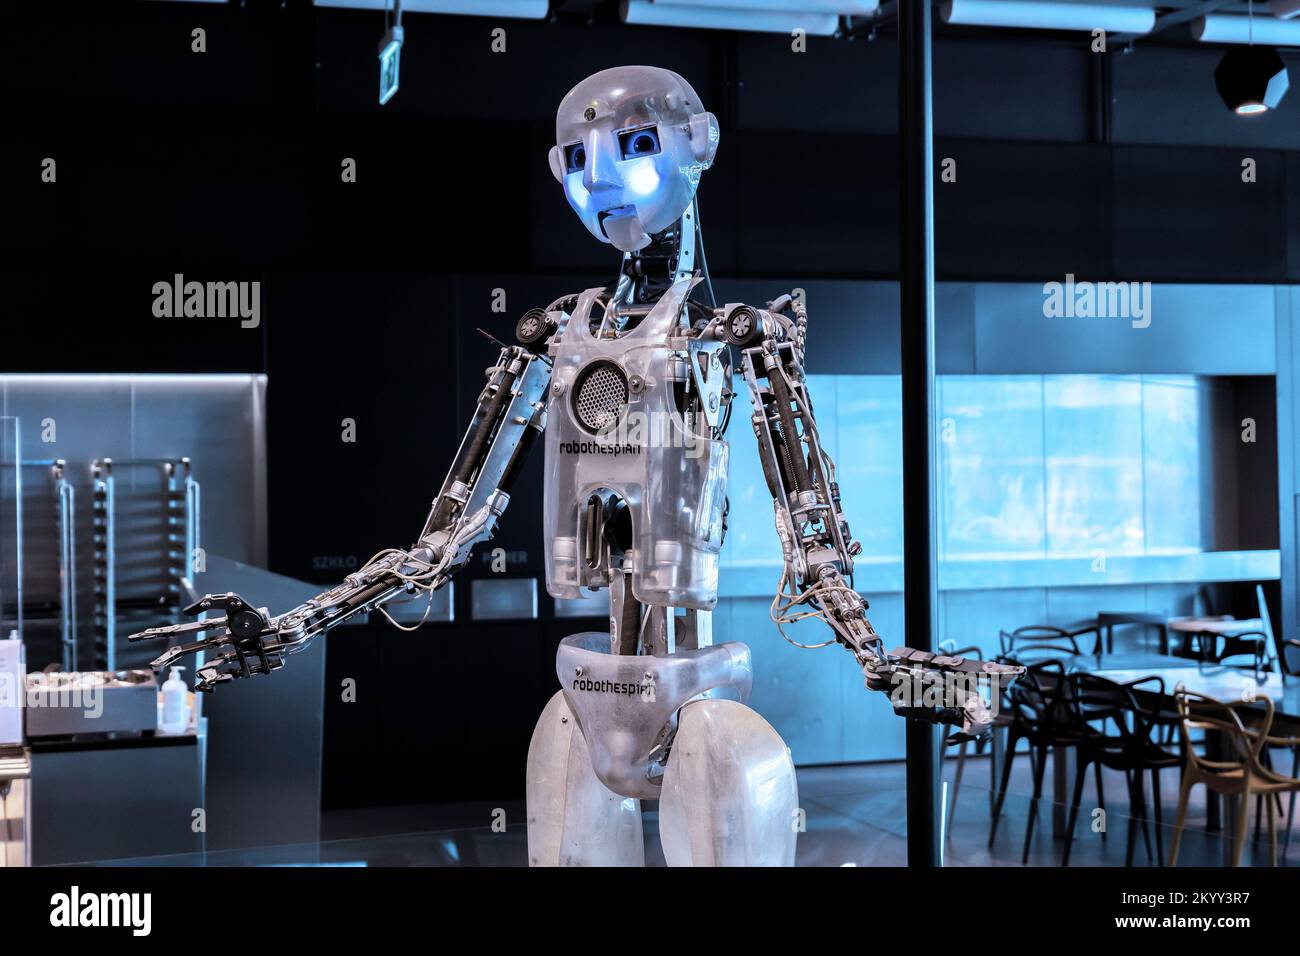 RoboThespian Engineered Arts Moderne humanoide Roboter-Nahaufnahme, zeigt menschliches Entertainment-Roboter-Konzept, niemand. Robotik-Technik-Ausstellung, Ausstellung Stockfoto